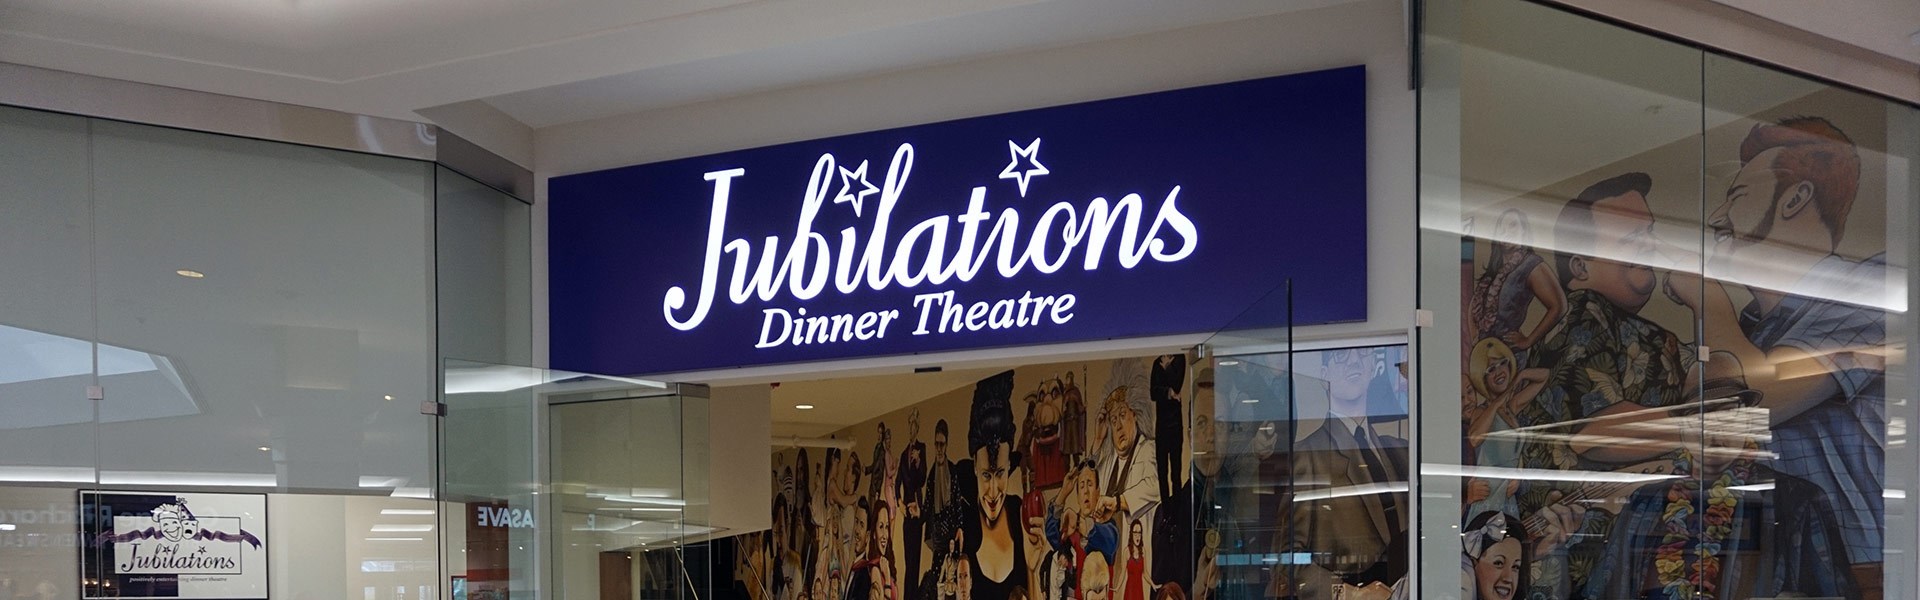 Jubilations Dinner Theatre